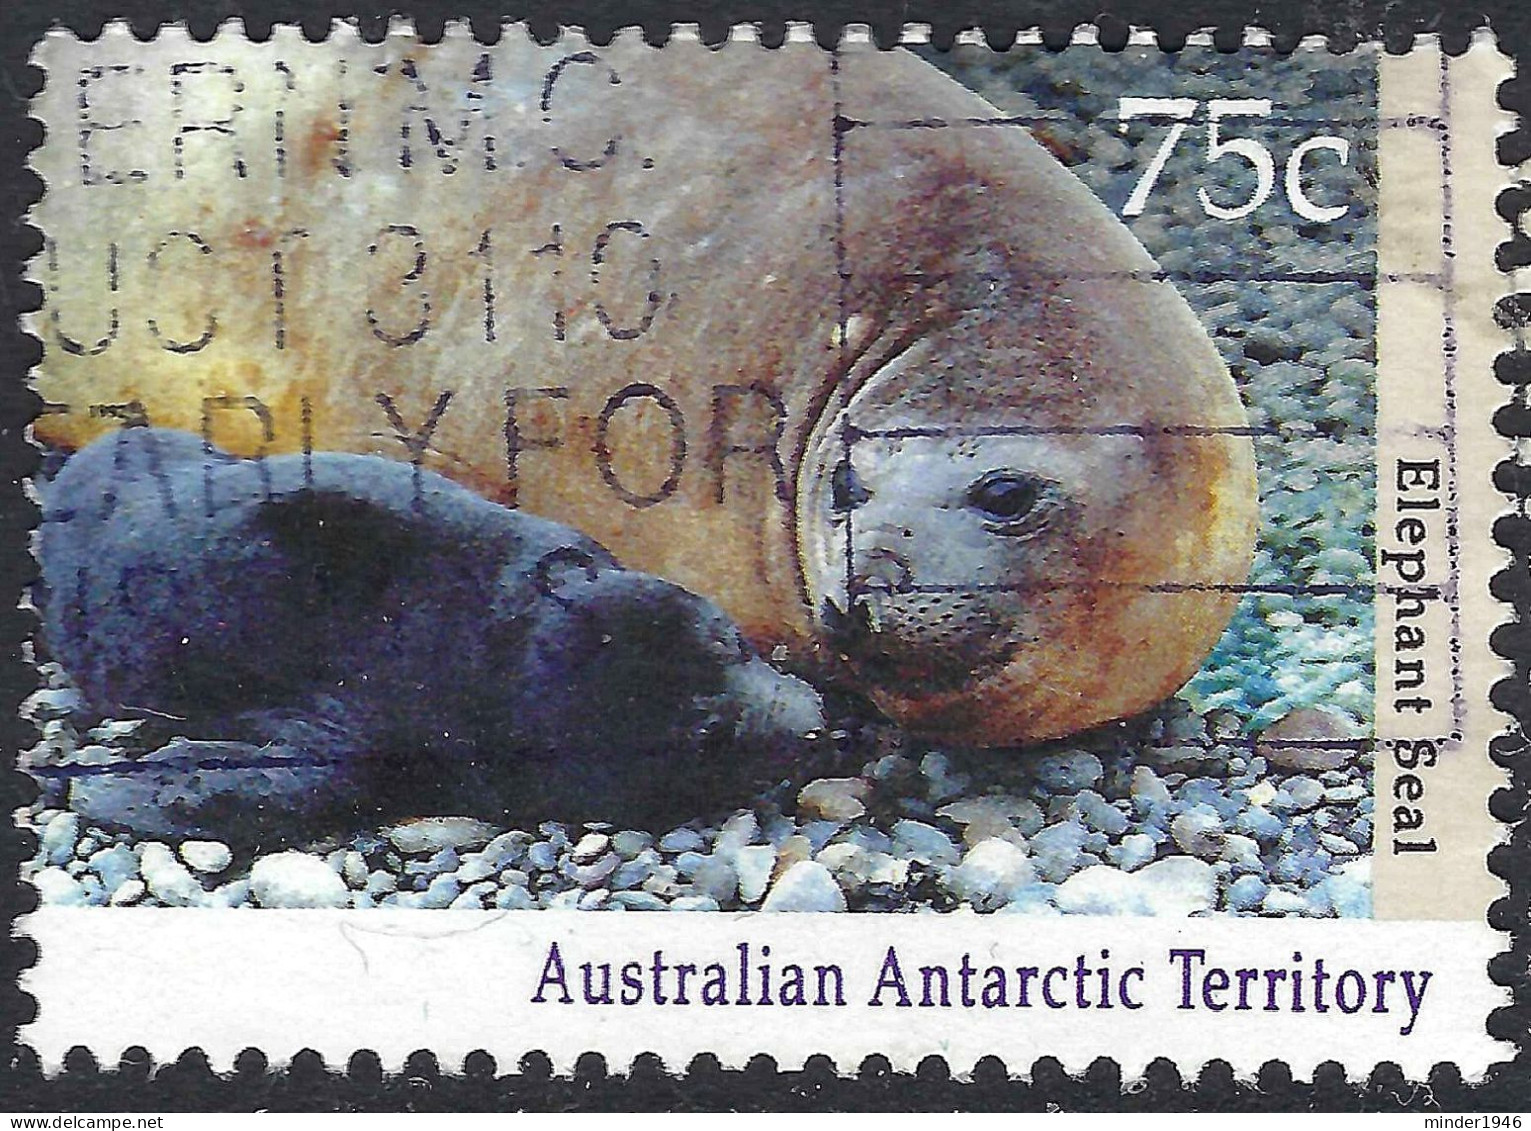 AUSTRALIAN ANTARCTIC TERRITORY (AAT) 1992 QEII 75c Multicoloured, Wildlife-Elephant Seal SG91 FU - Gebraucht